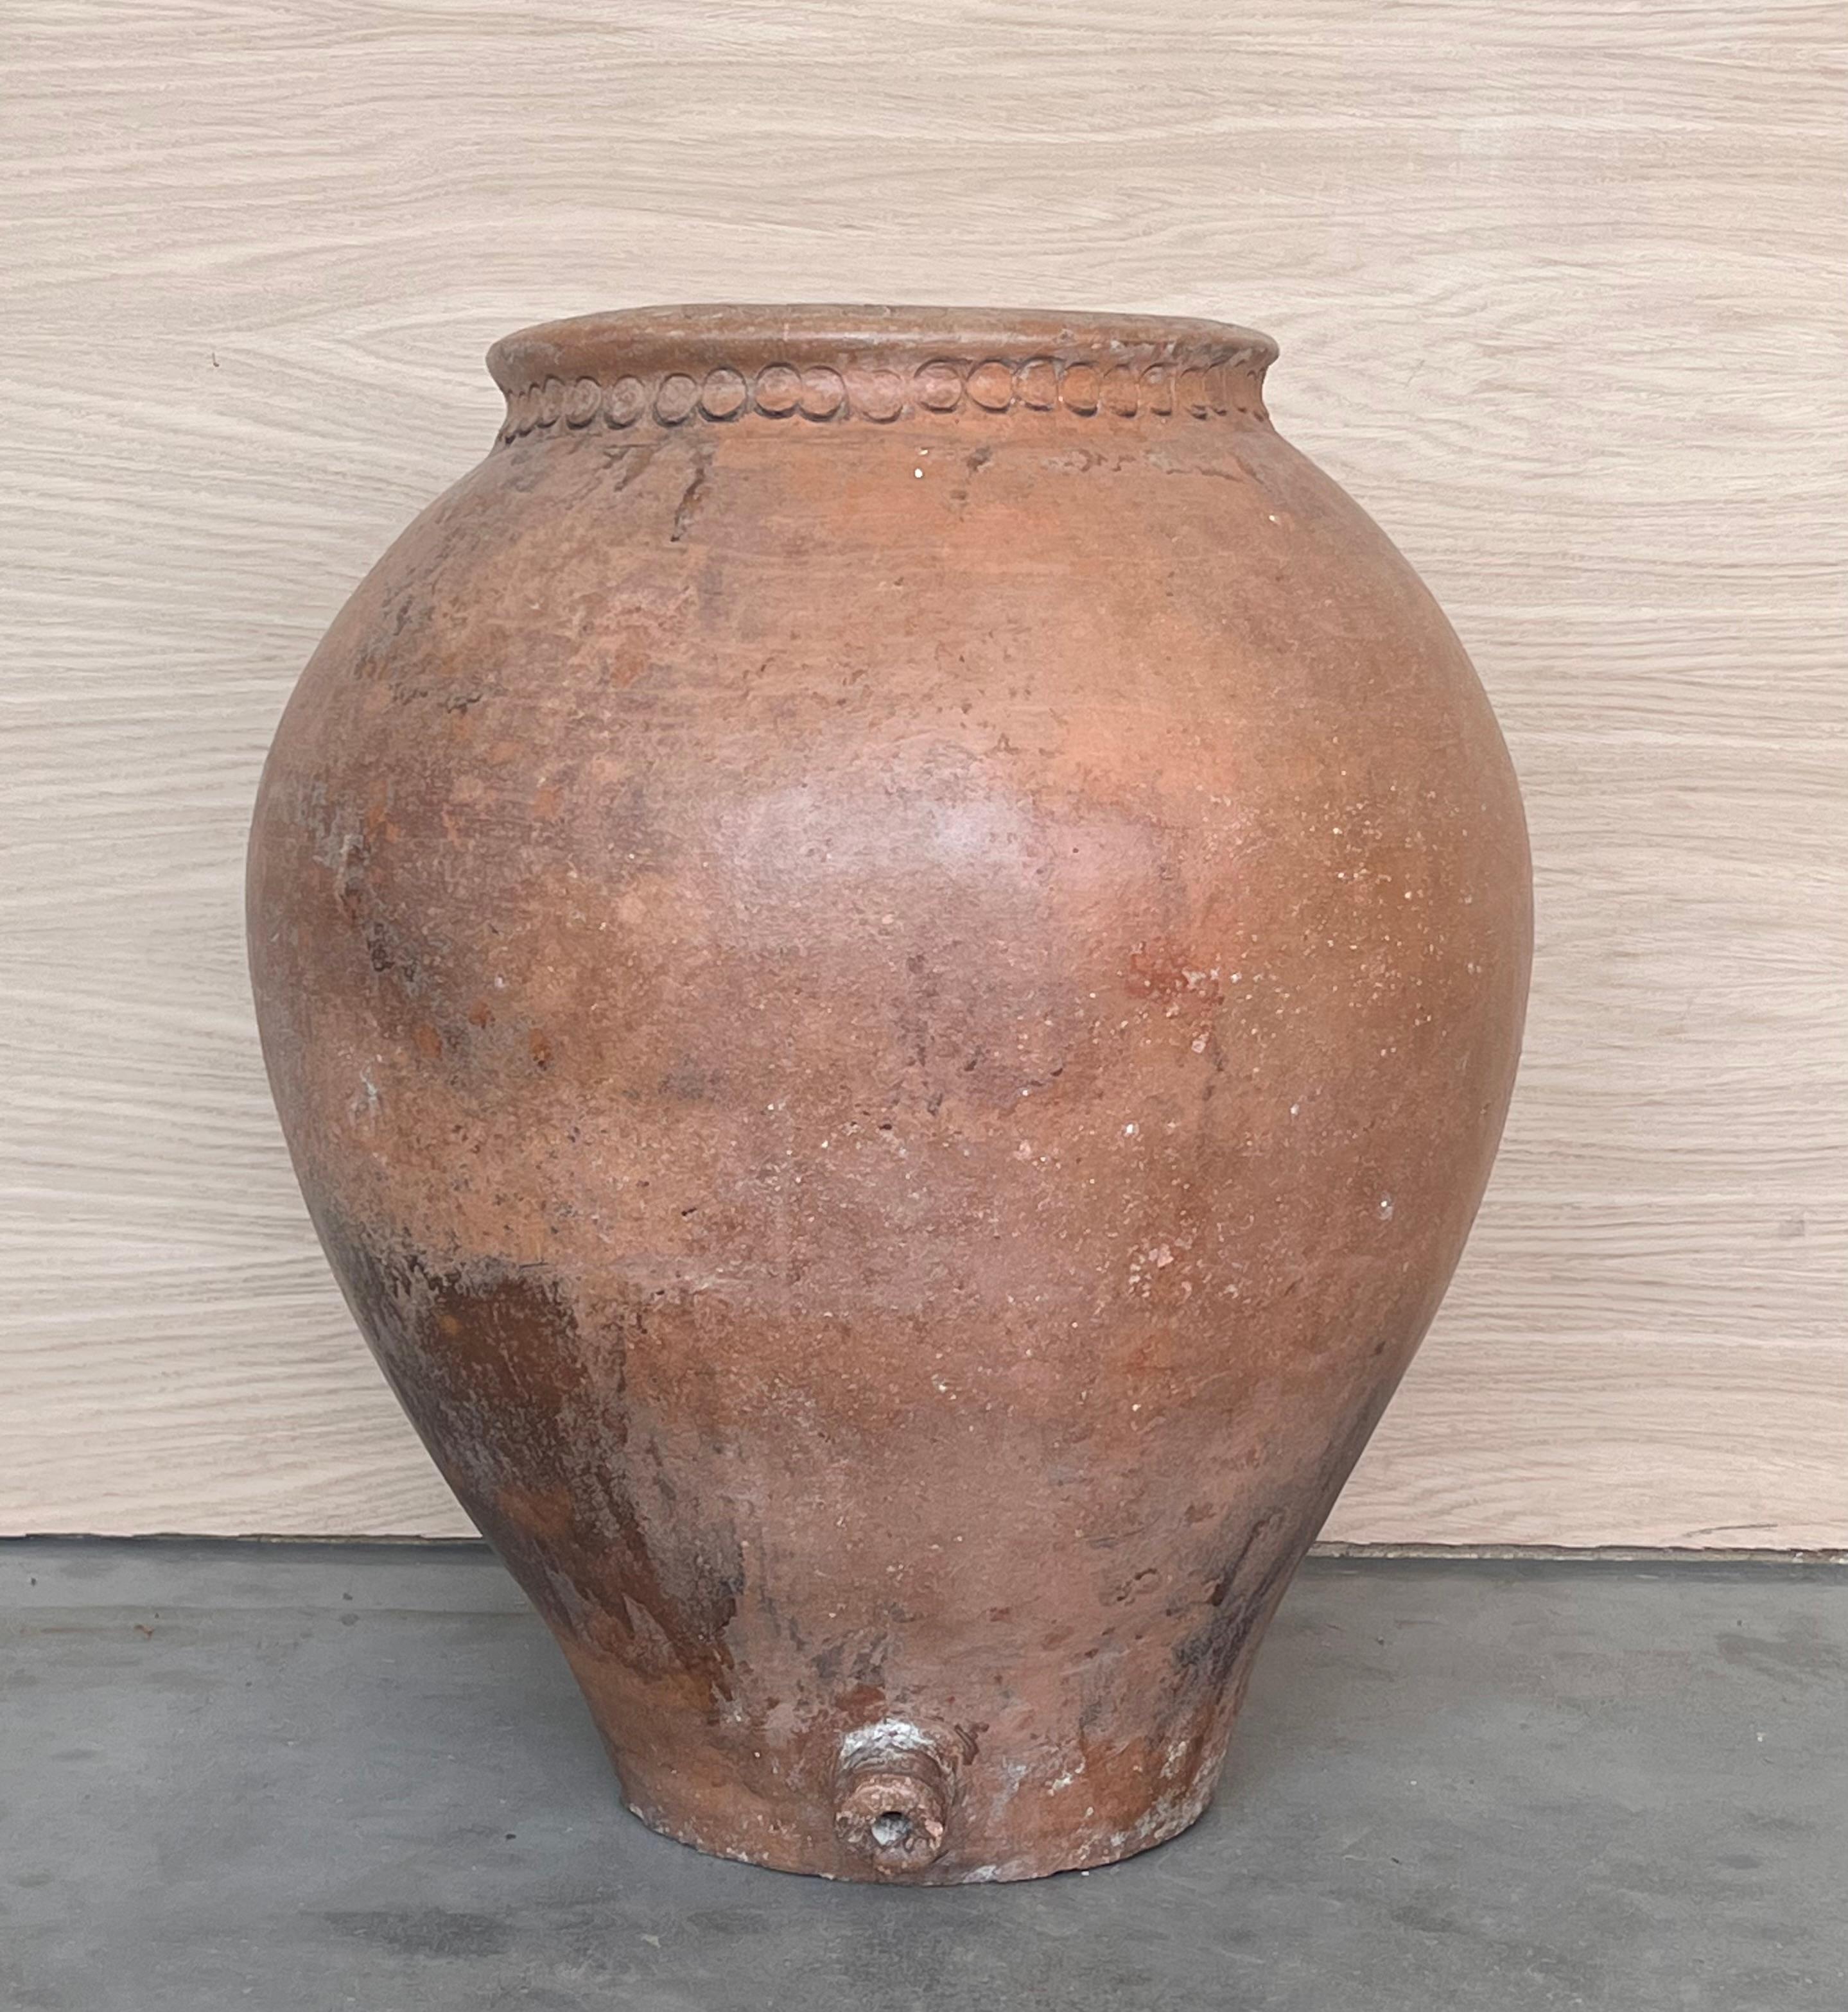 16th Century Spanish Terracotta Vase

Hand made marks around the vase. 